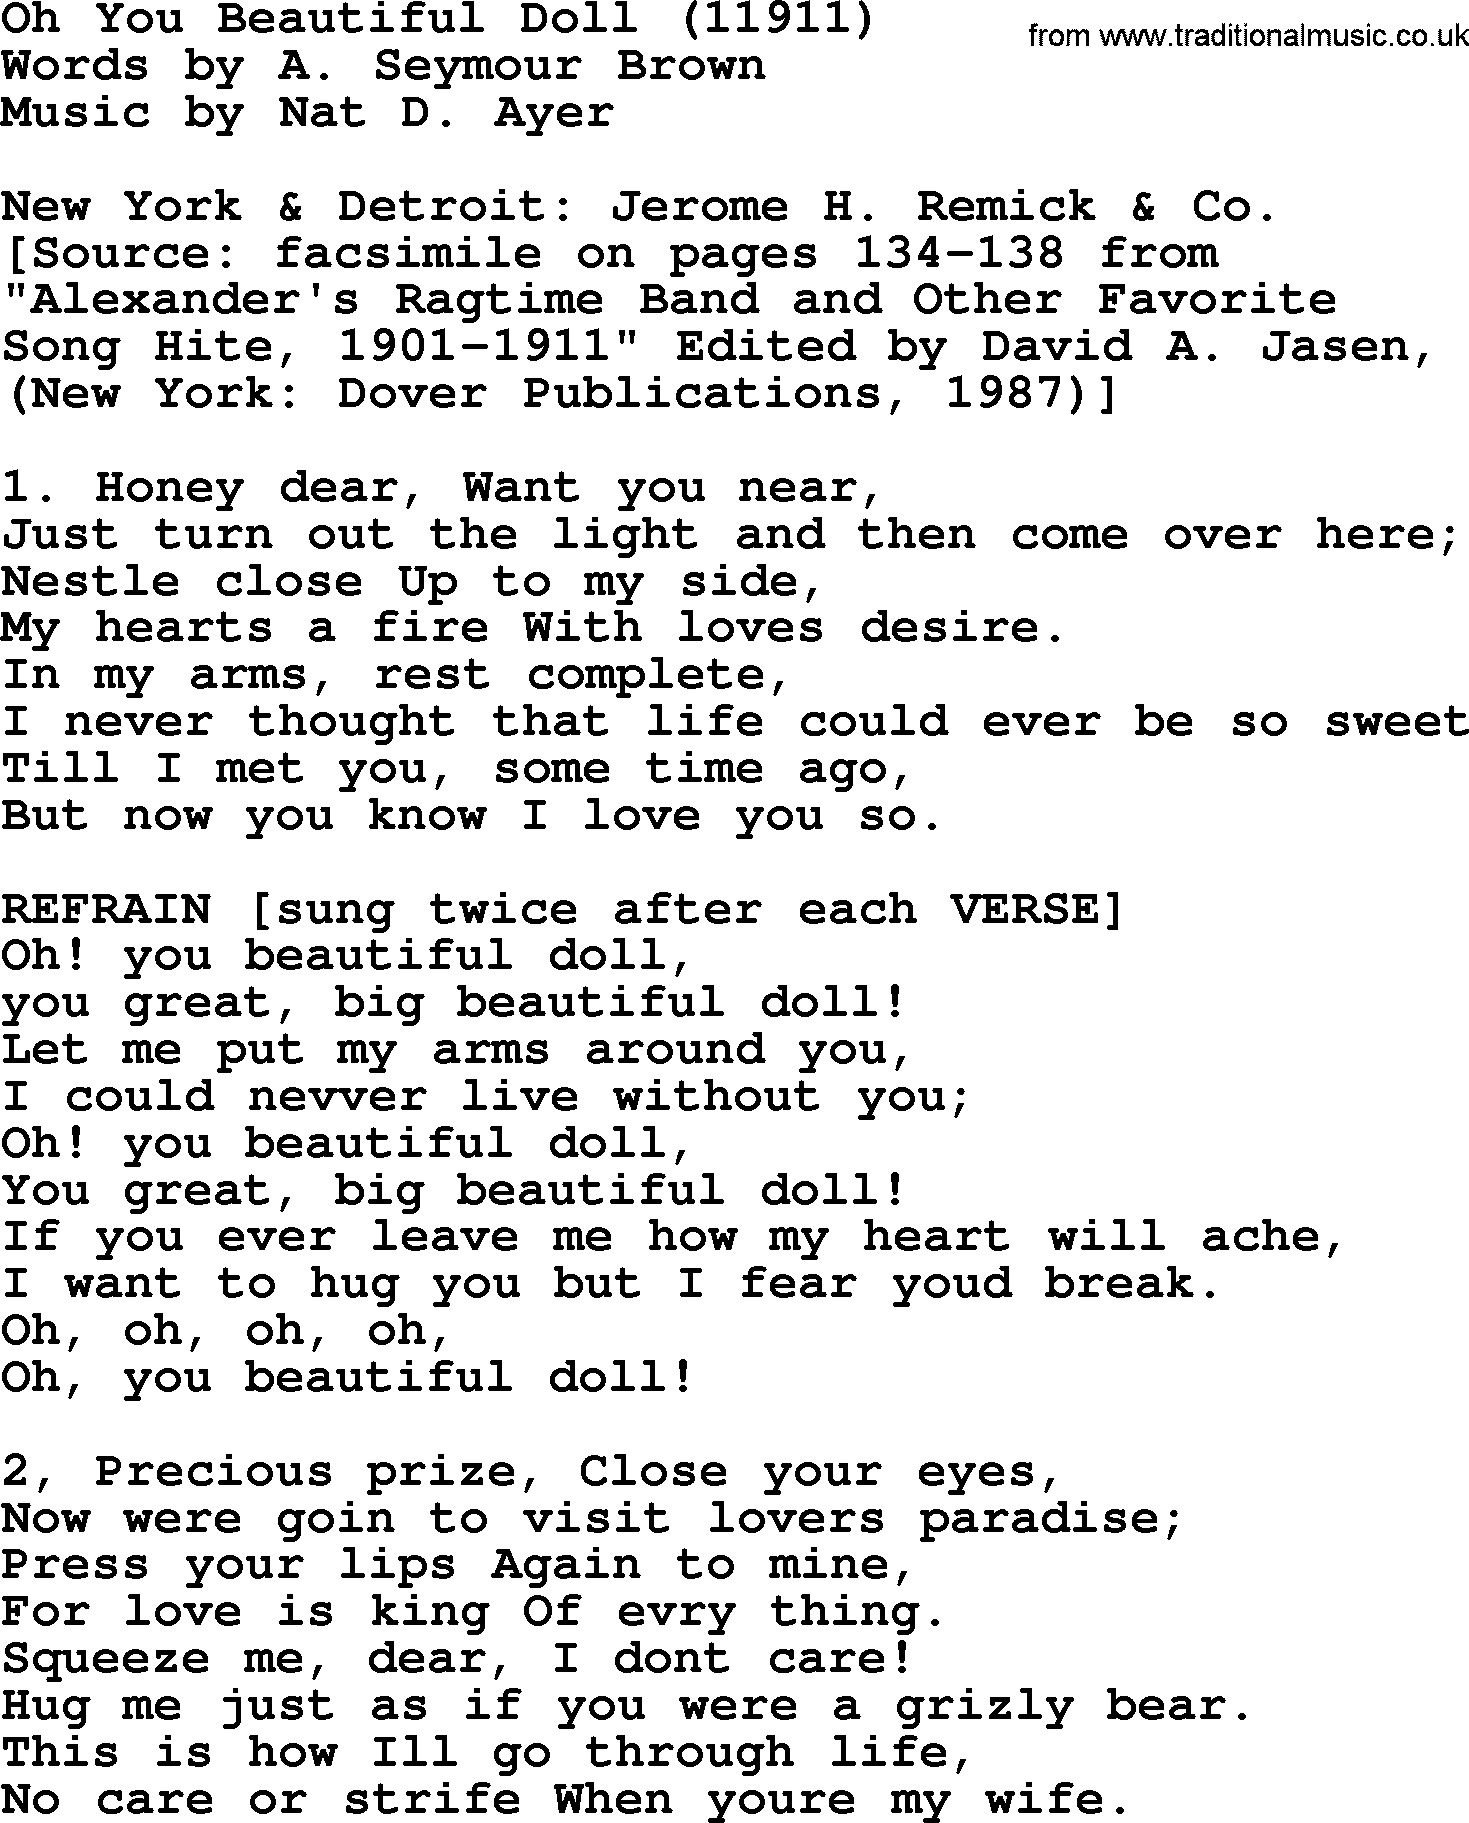 World War(WW1) One Song: Oh You Beautiful Doll 11911, lyrics and PDF